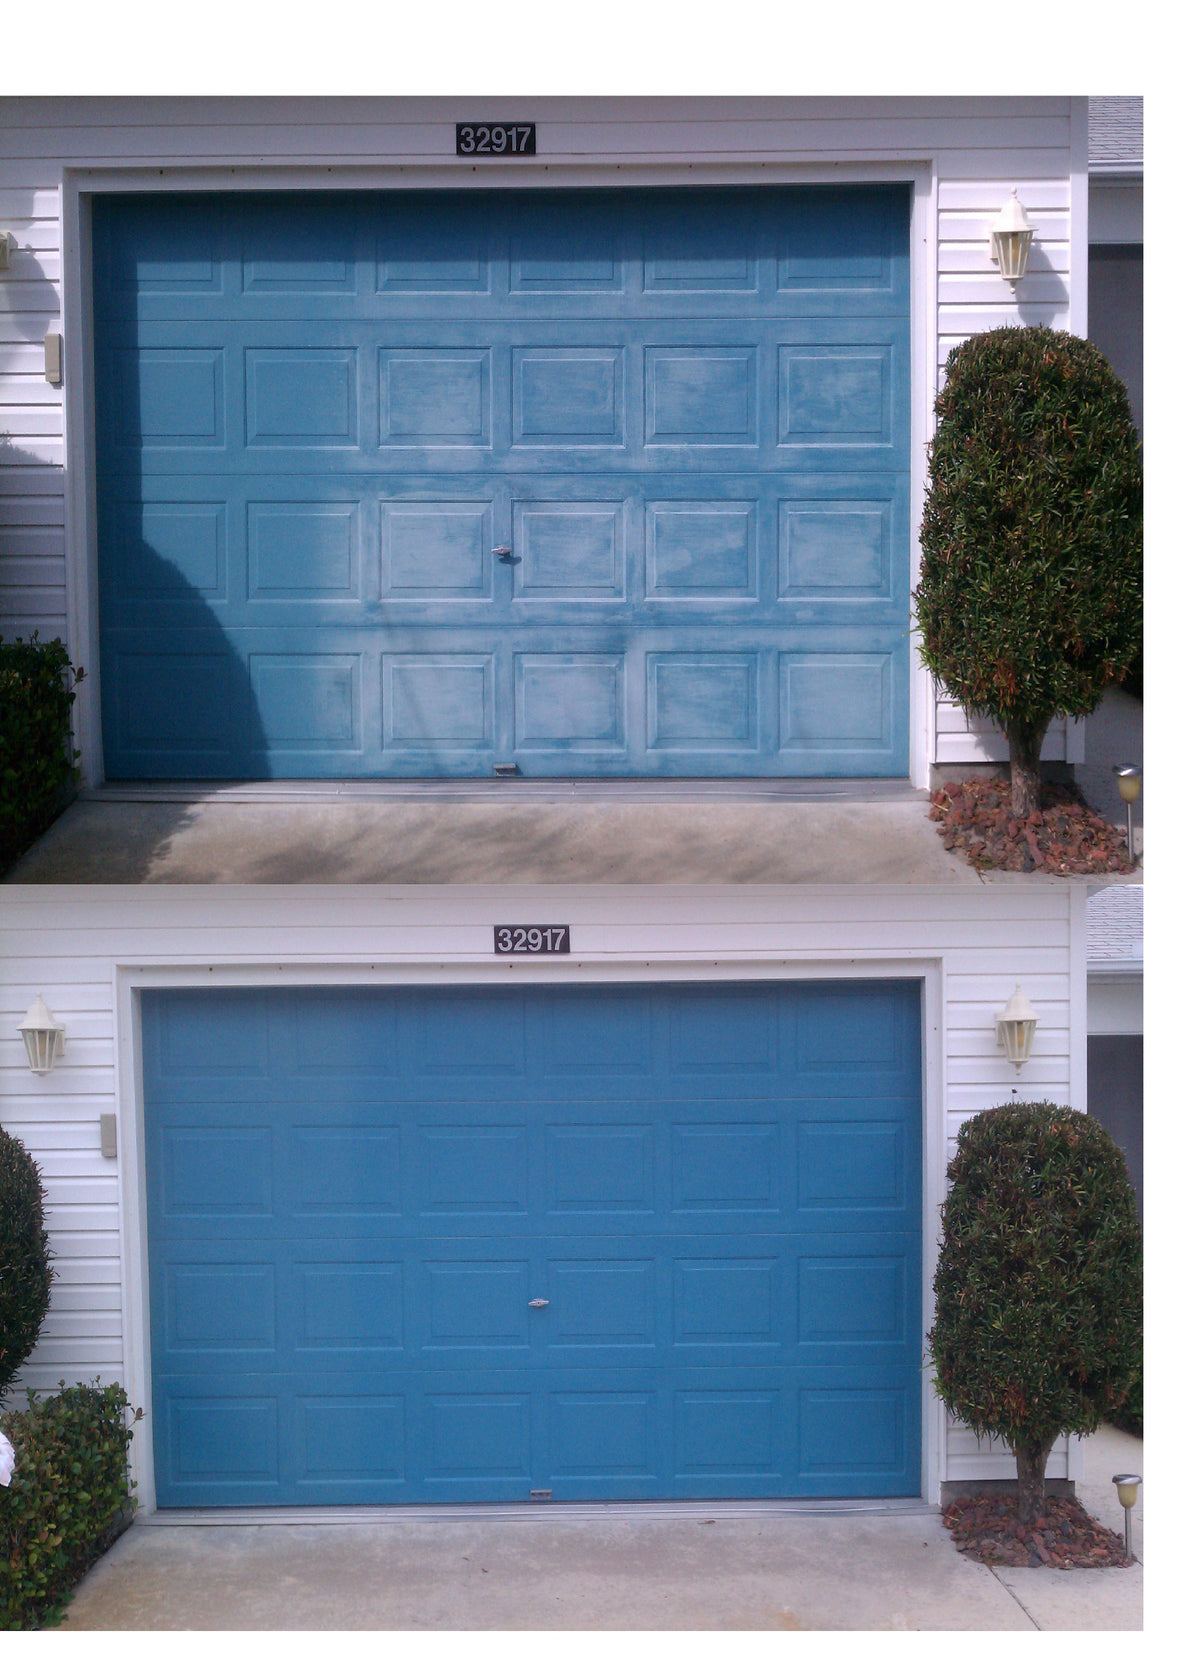 Oxidized Blue Garage Door Restored With Vinyl Renu Vinyl Siding Restorer Top Image Oxidized Bottom Image Original Color Restored